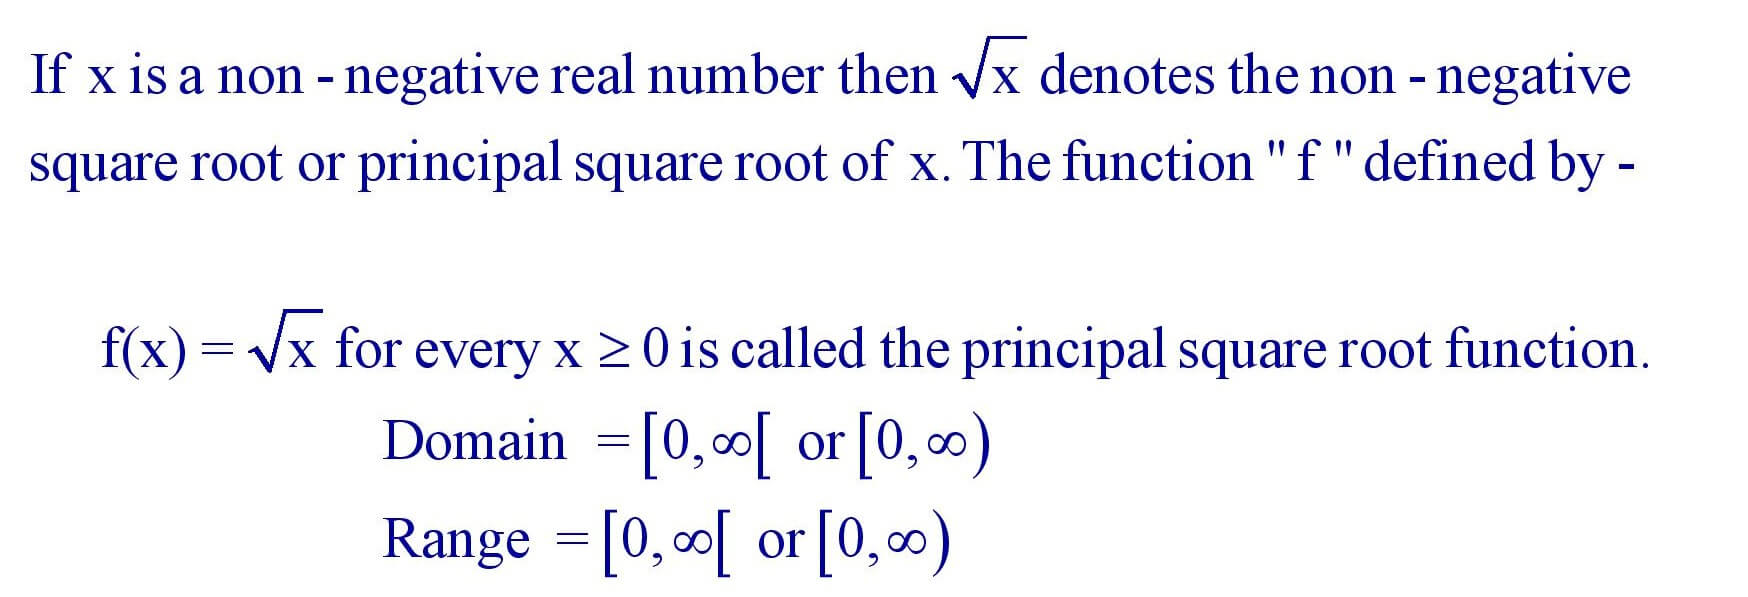 Principal square root function